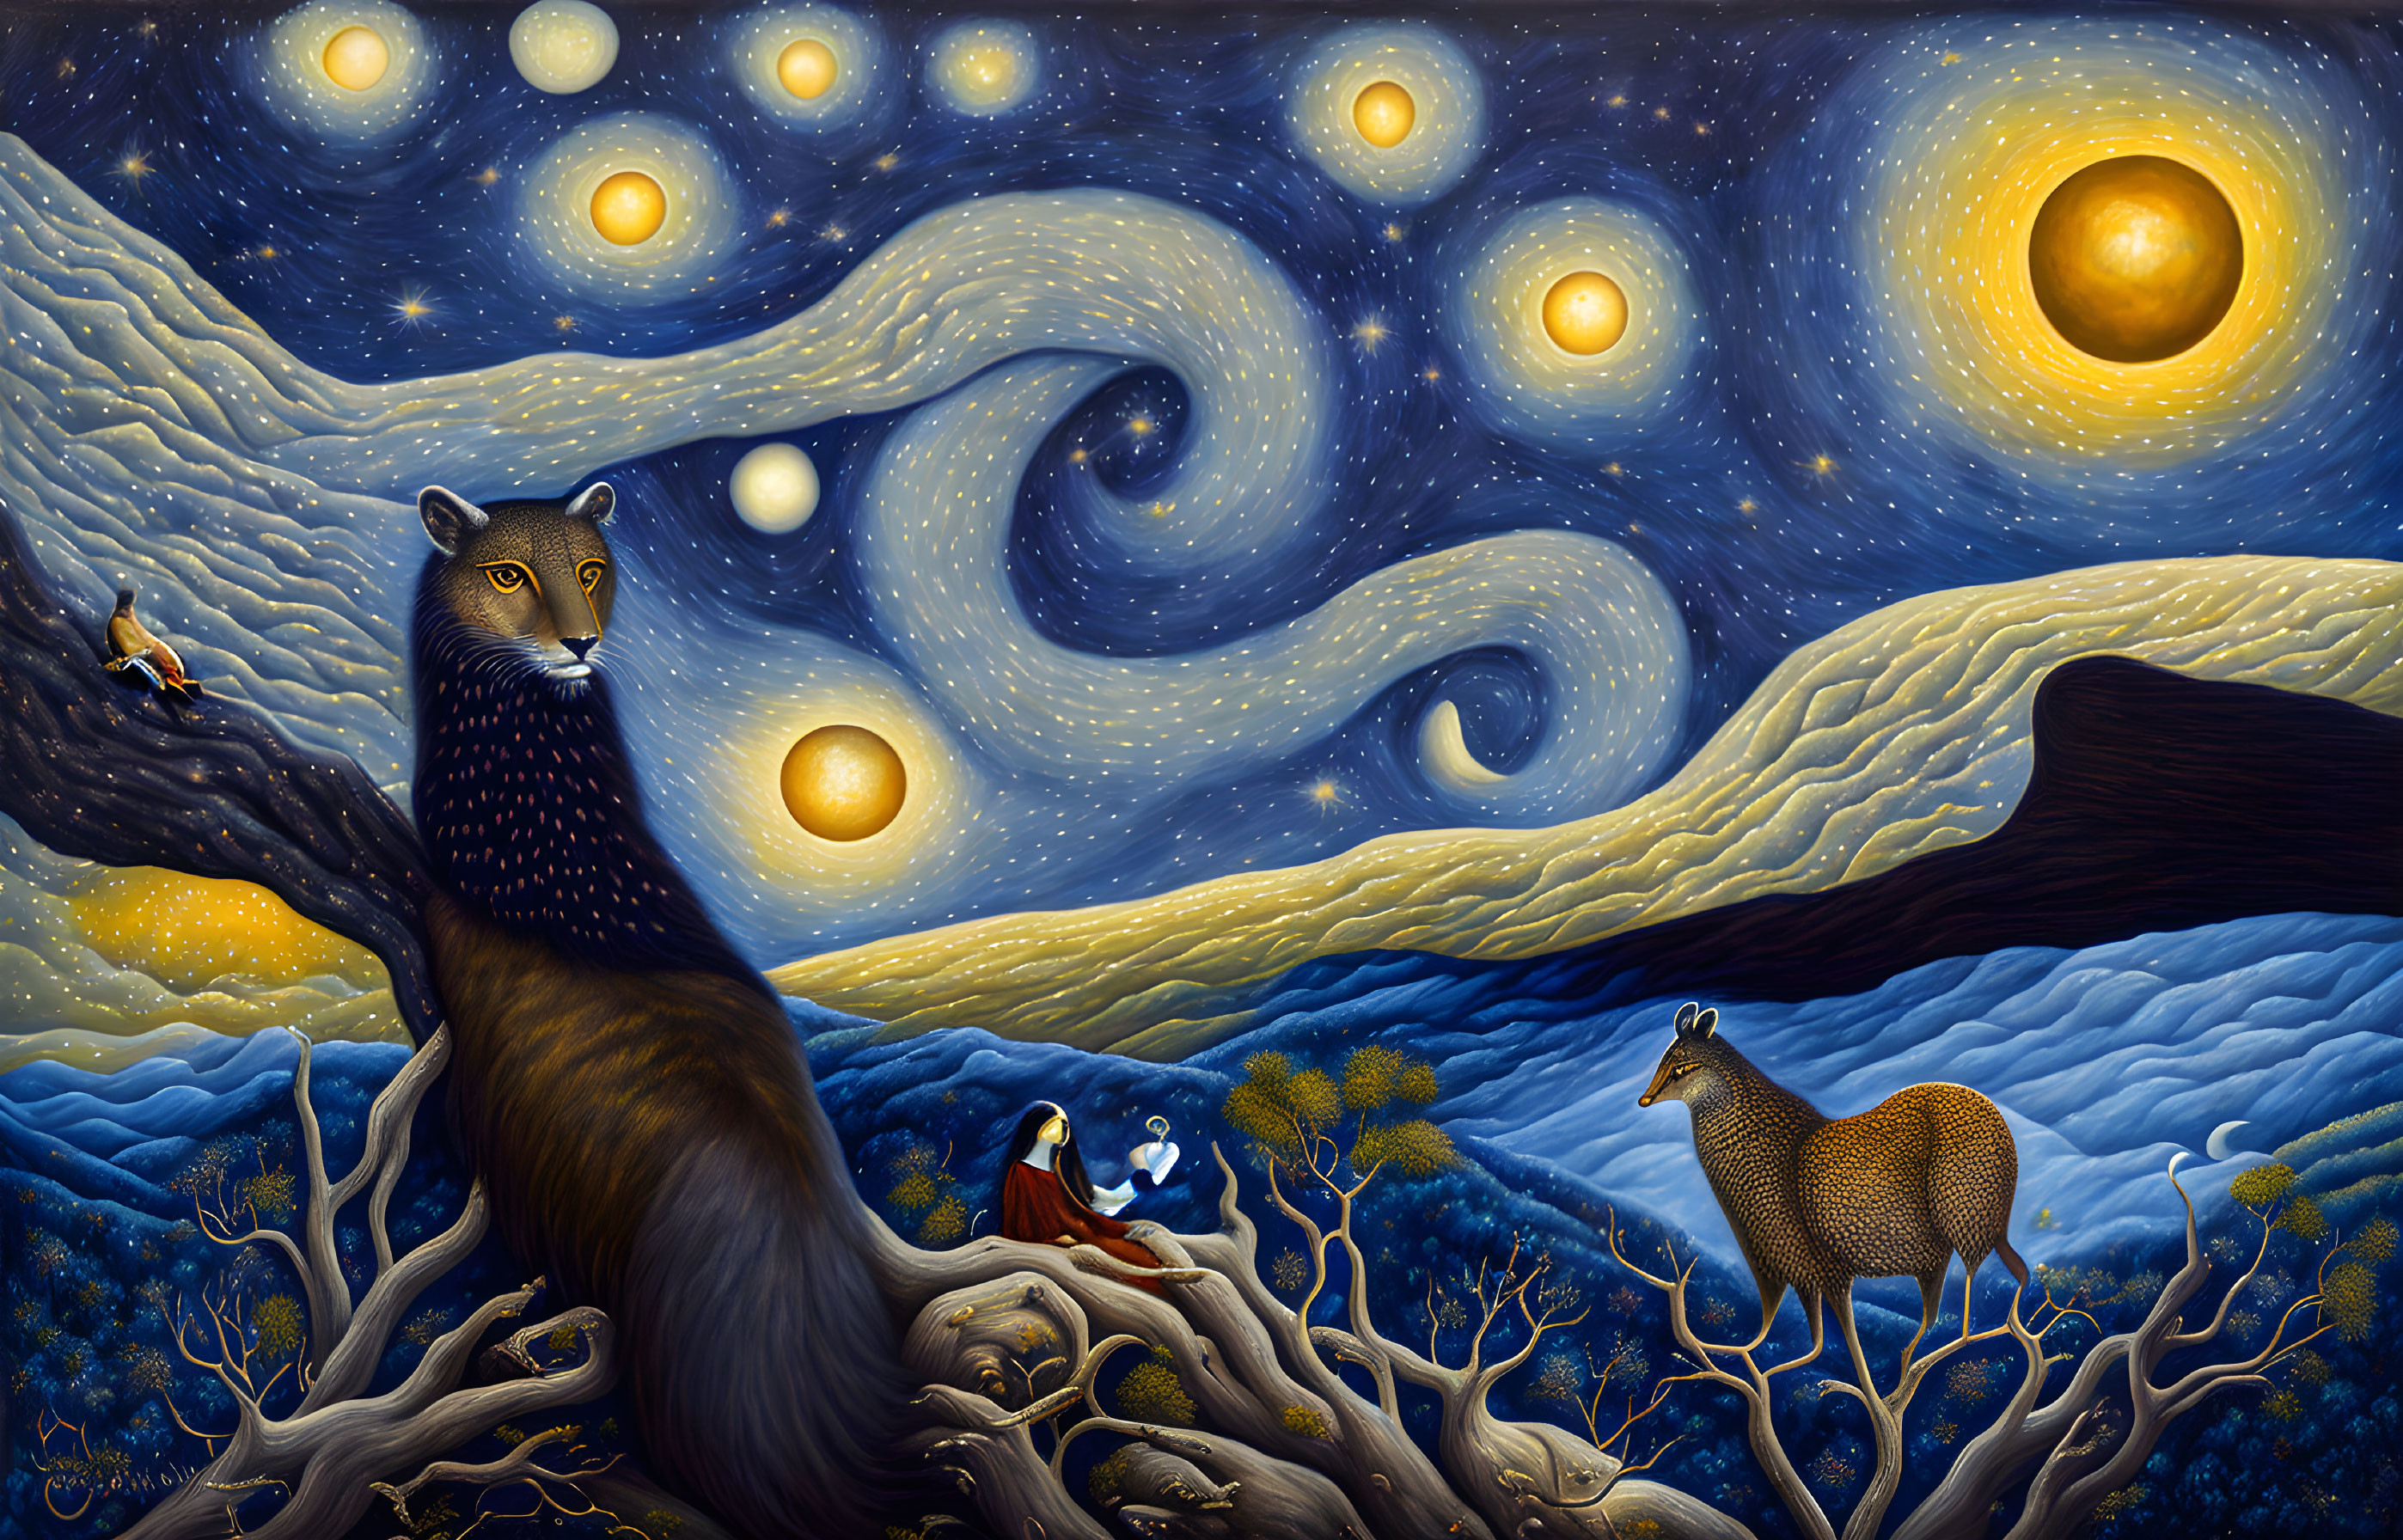 Nighttime Landscape with Swirling Skies, Moon, Stars, Owl, Deer & Terrain